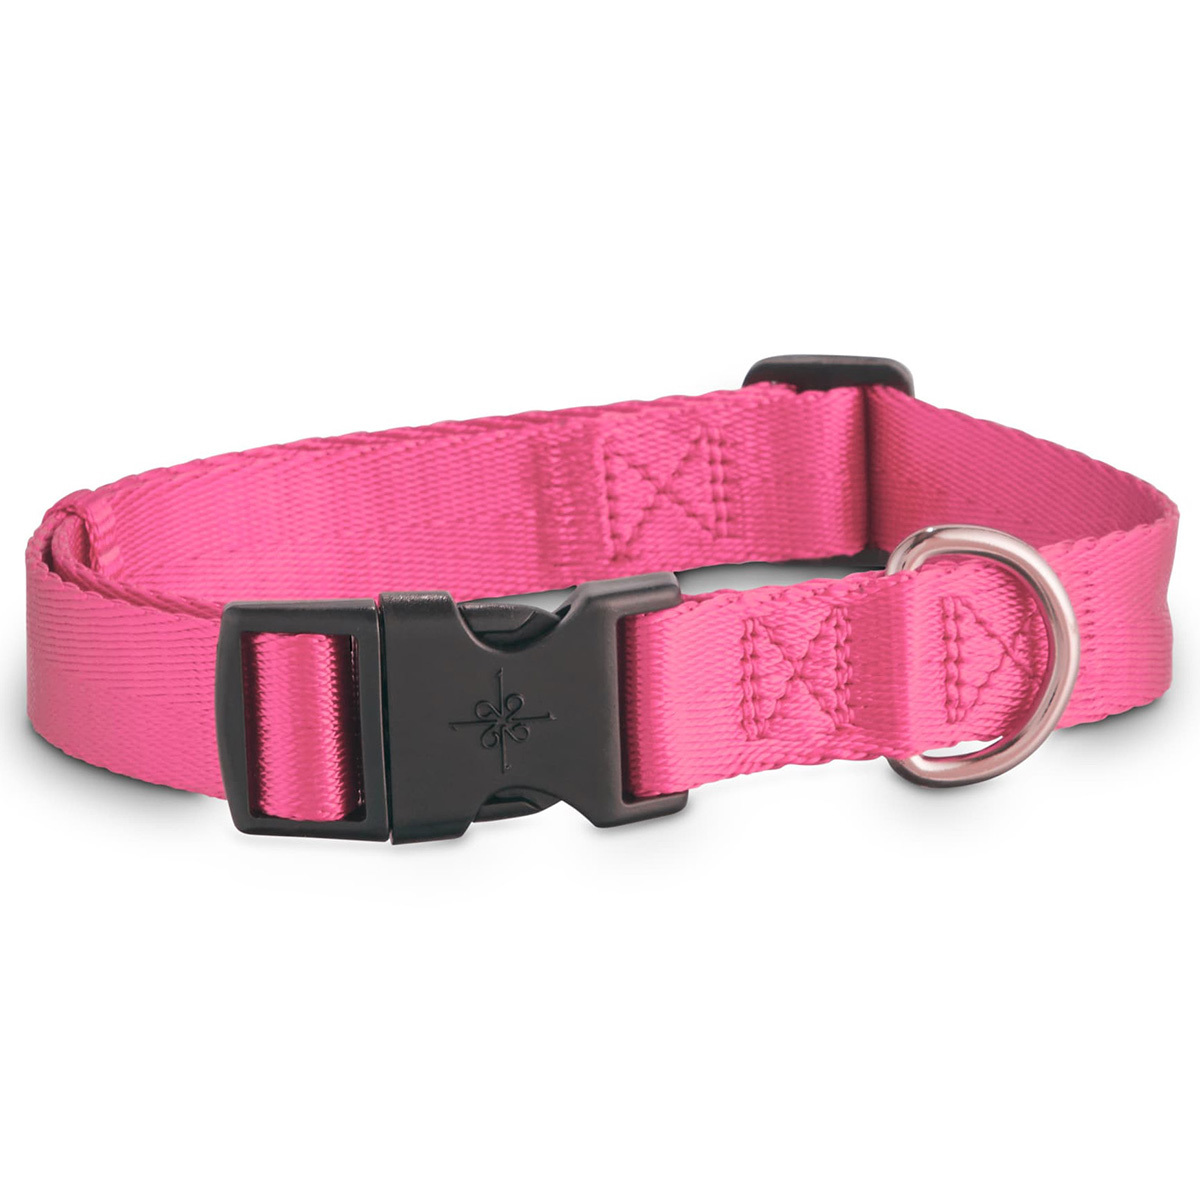 Taglory Collar Perro Rosa Collar Nylon Reflectante Neopreno Forrado Ajustable para Perros Cachorro